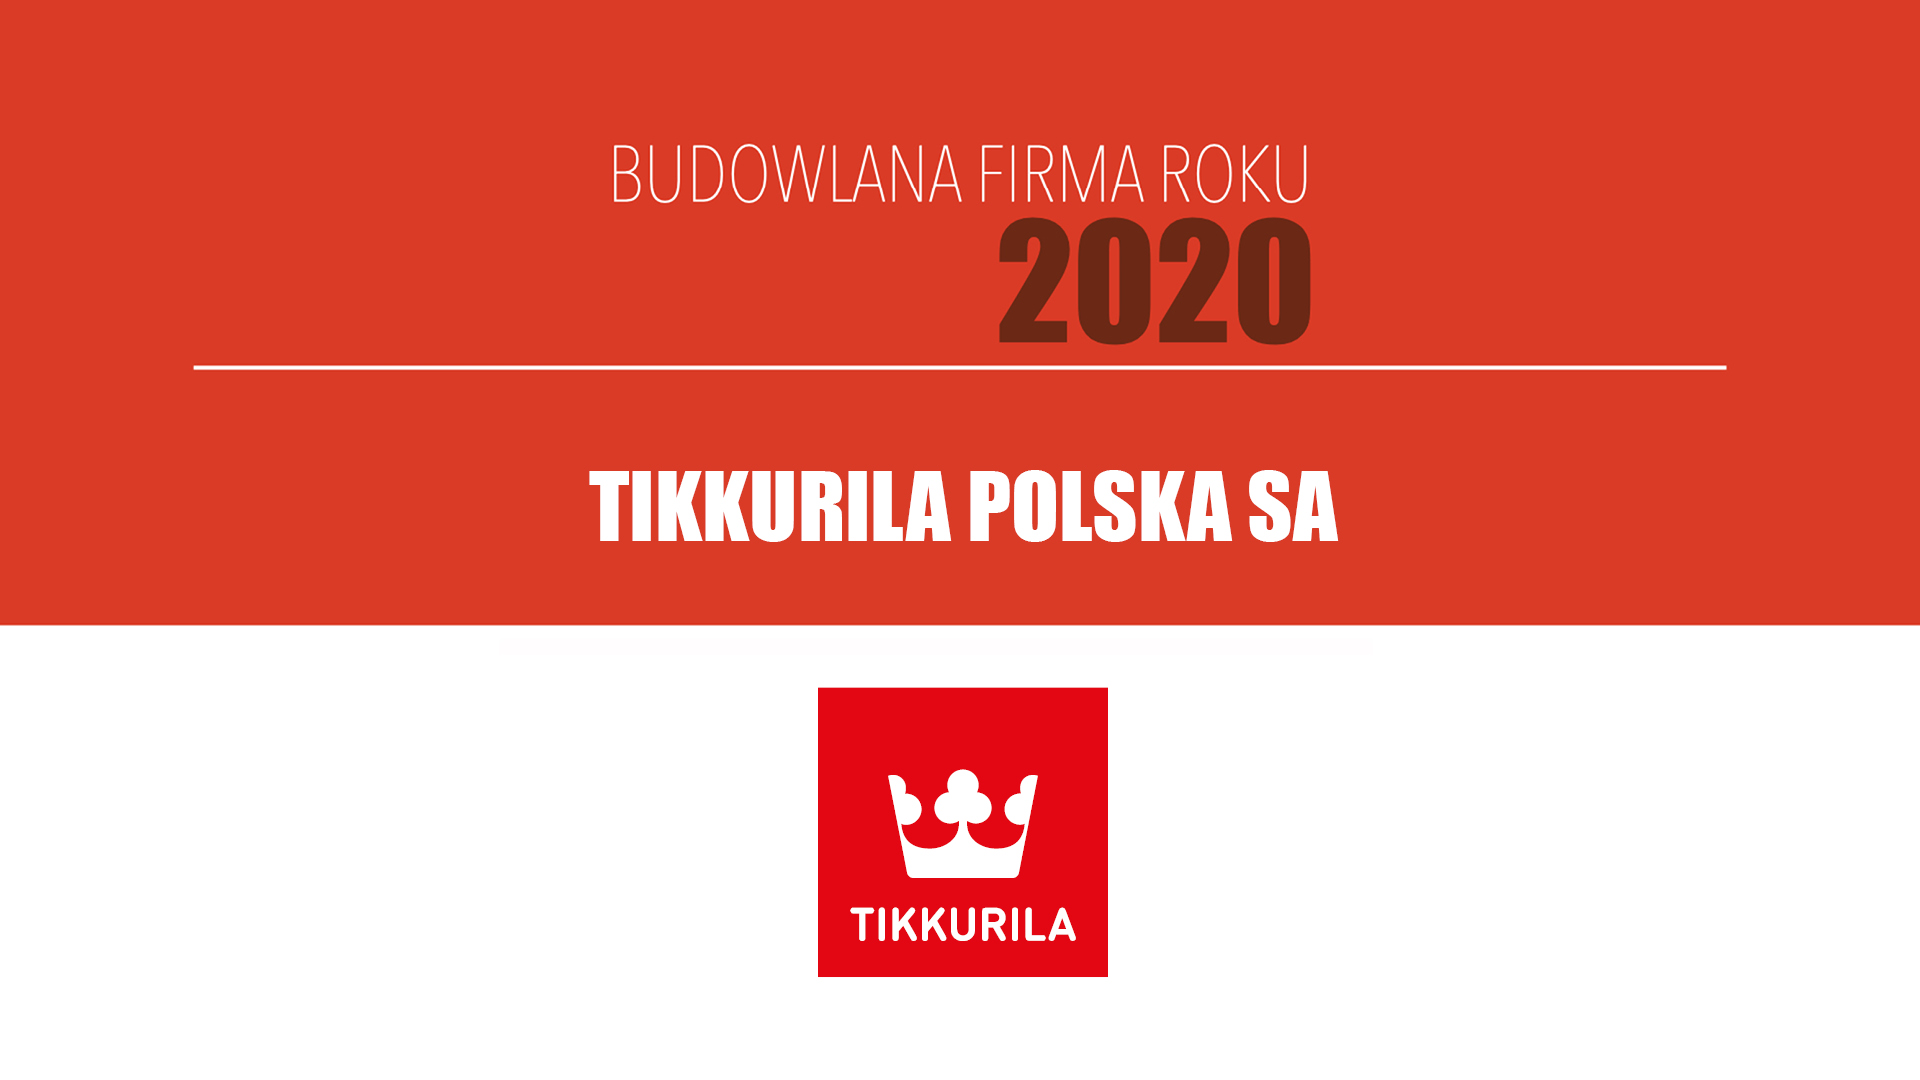 TIKKURILA POLSKA S.A. – Budowlana Firma Roku 2020